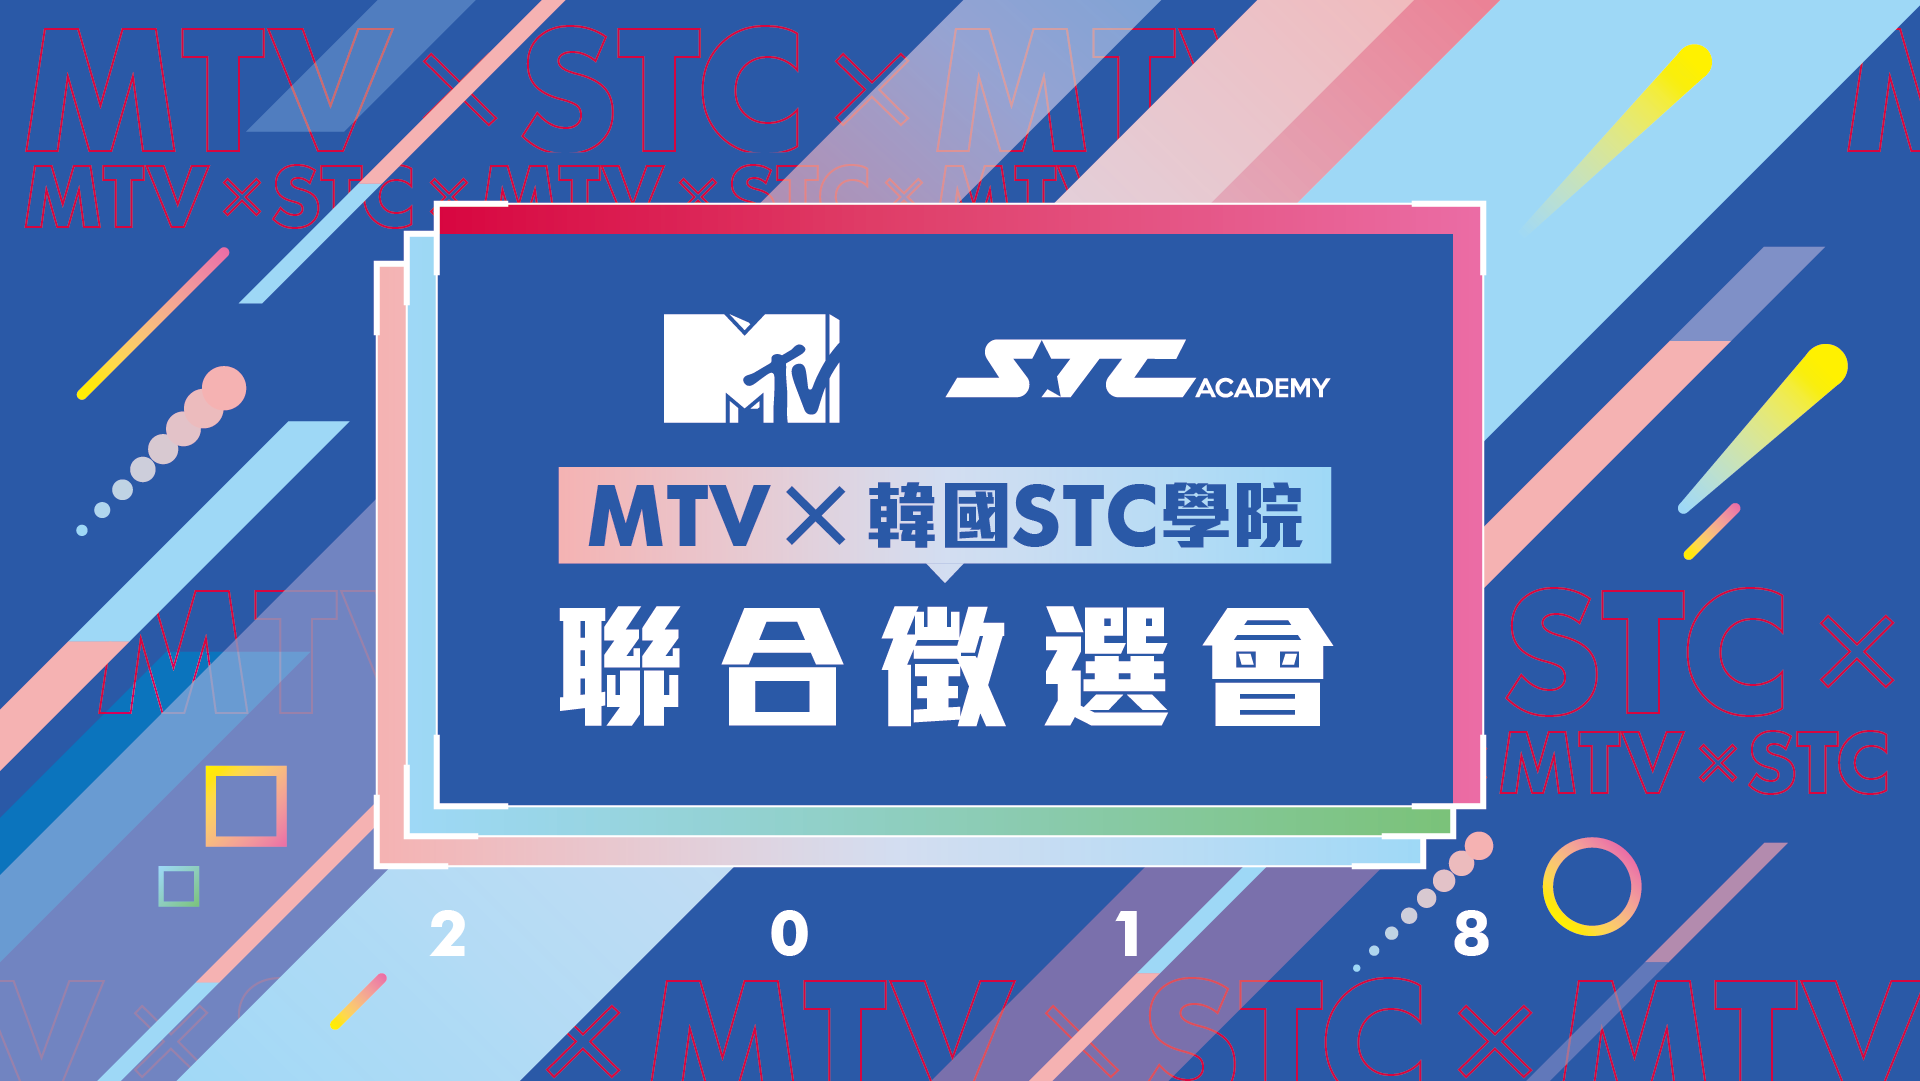 MTV X 韓國STC學院徵選會-主視覺